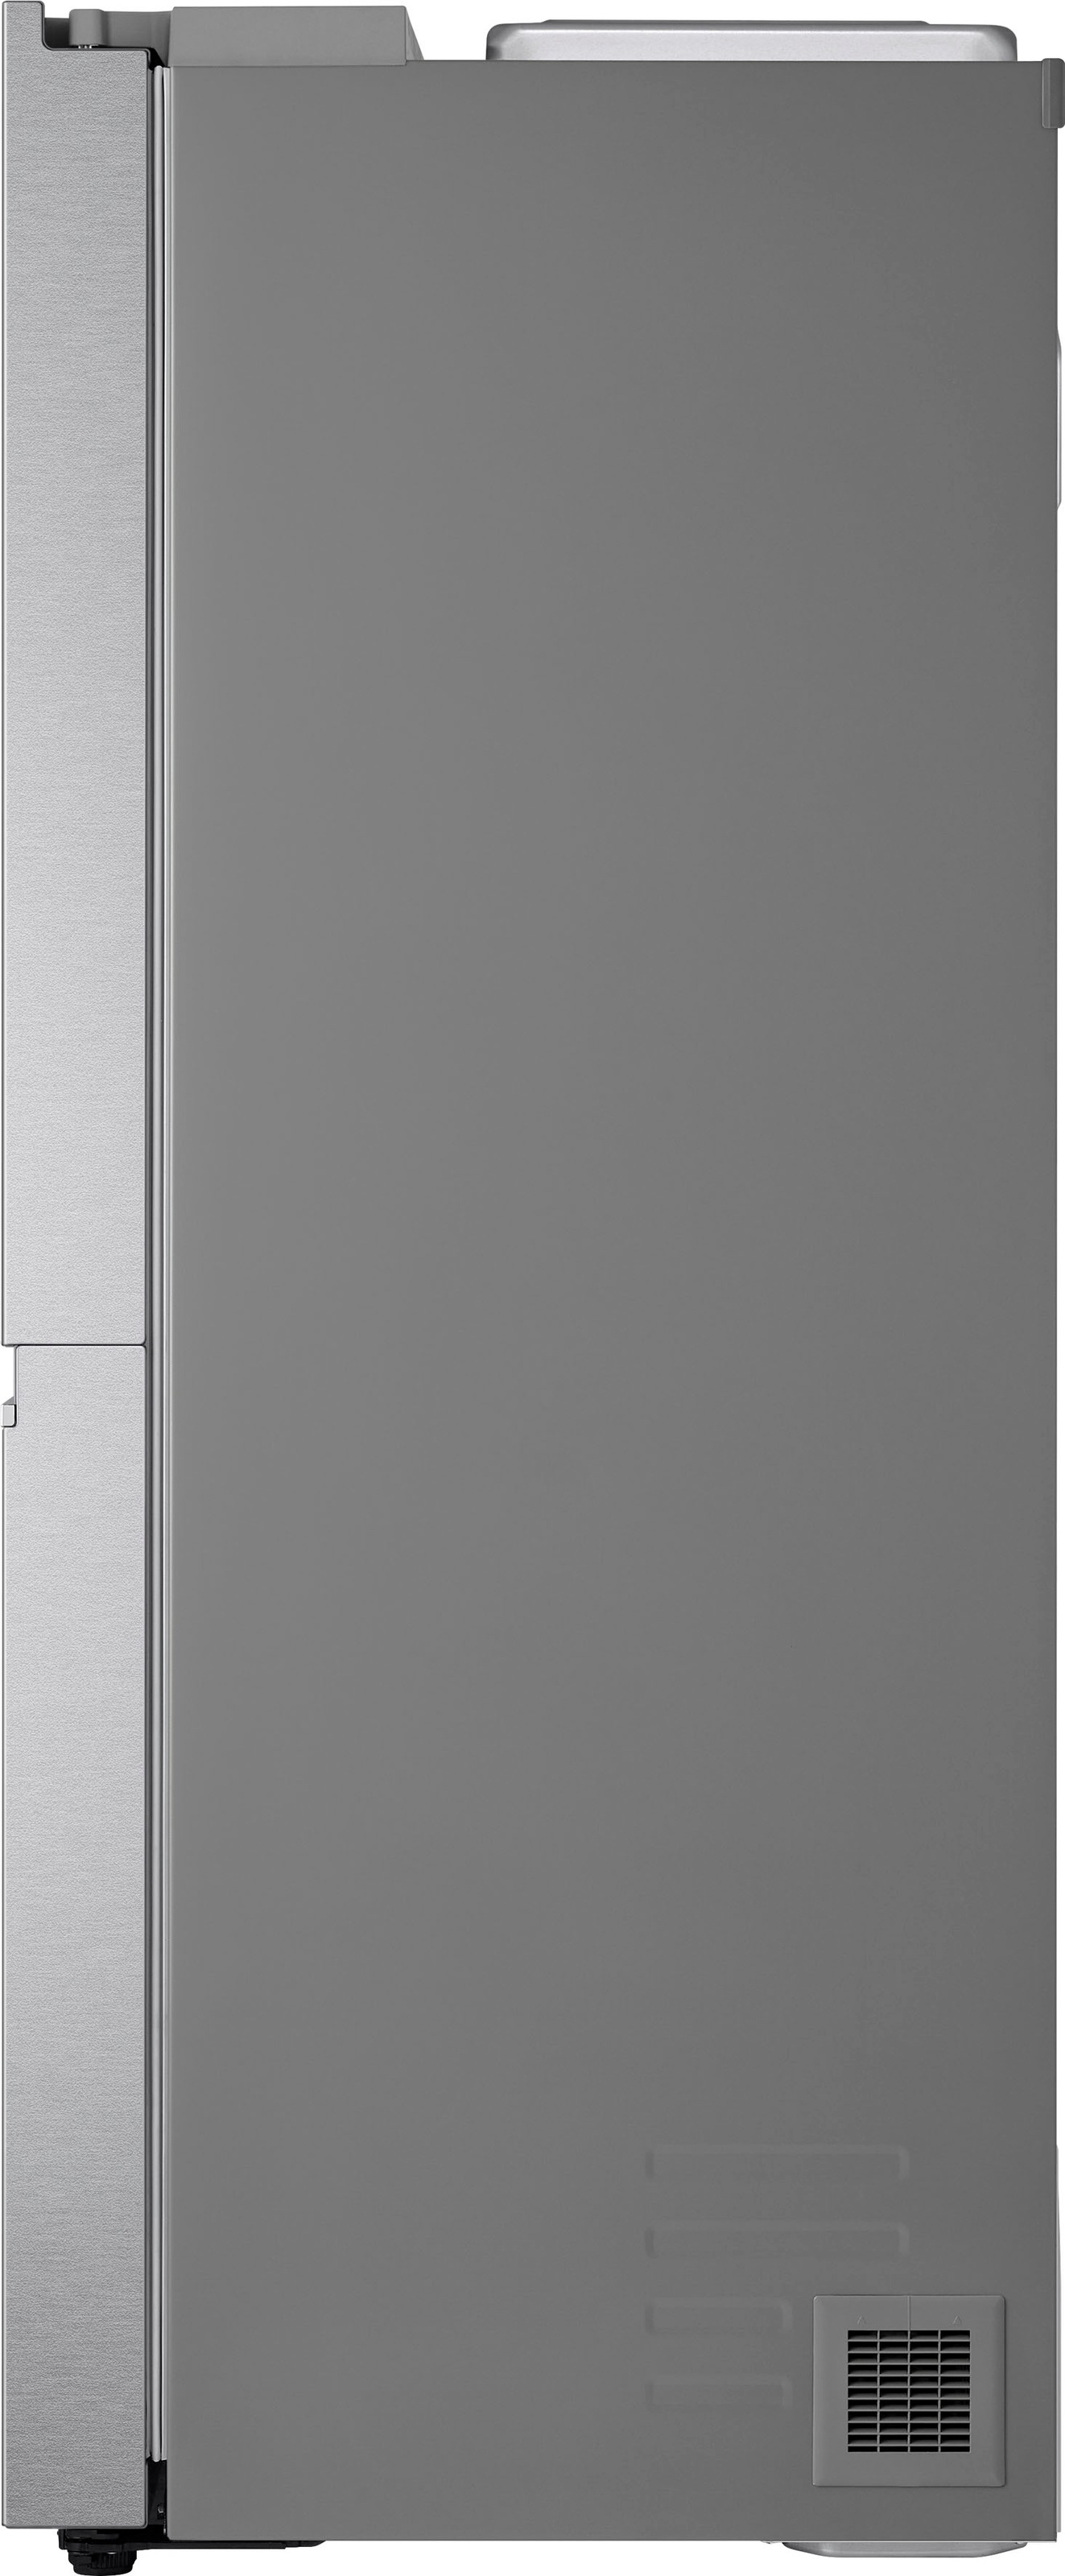 LG Side-by-Side »GSLV91MBAC«, GSLV91MBAC, 179 cm hoch, 91,3 cm breit, 4 Jahre Garantie inklusive